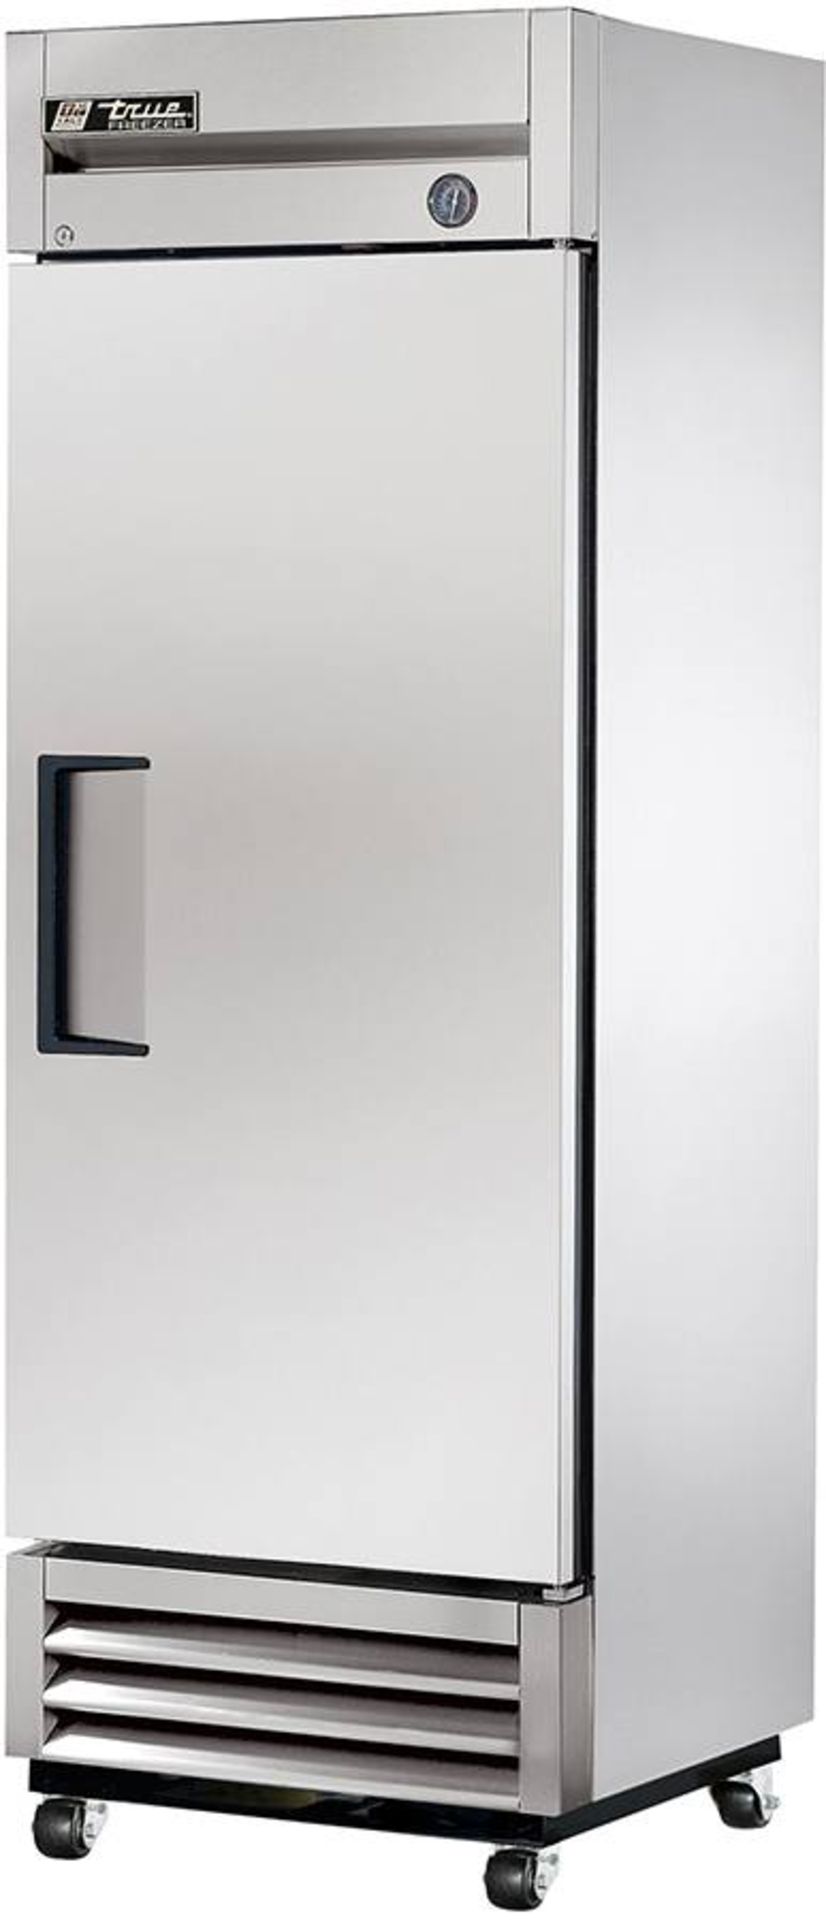 1 x True T-19FZ Upright Single Solid Door Freezer - Stainless Steel Finish With Aluminium Interior -